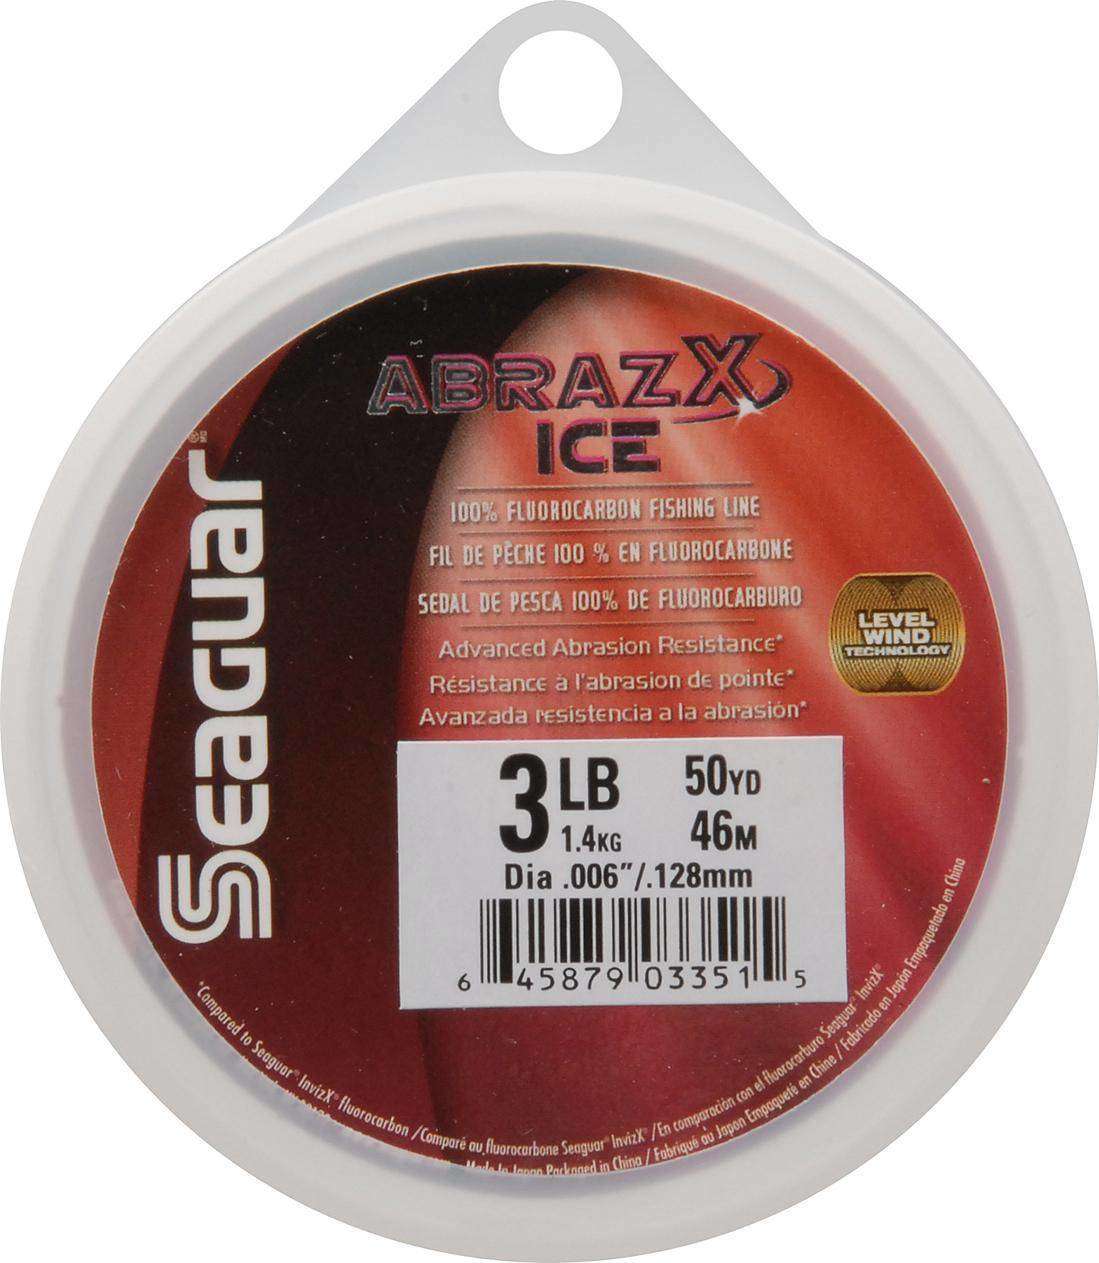 Seaguar AbrazX 100% Fluorocarbon